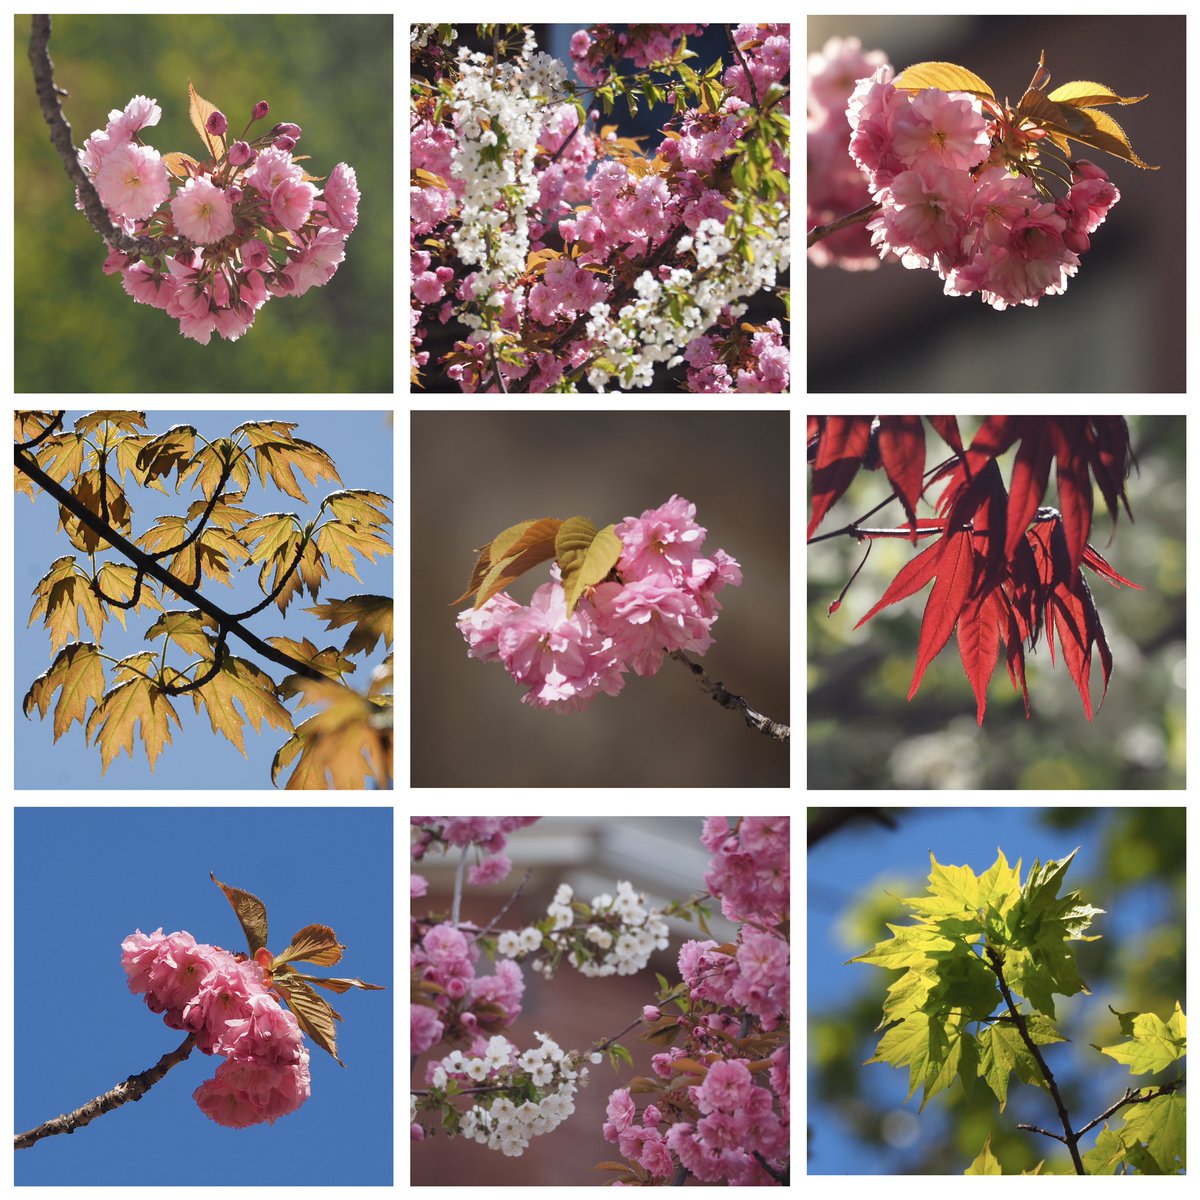 More spring… #spring #blossoms #Toronto #Queenspark #cherryblossom @jo_annie42 @jane_sparrow13 @ArtemisKellogg @vale__ri @littlemore20 @xobreex3 @BillMontei @StormHour @ThePhotoHour @admired_art @SiKImagery @salina_mills @VisualsbySauter @ArtemisKellogg @MrWhoCapture